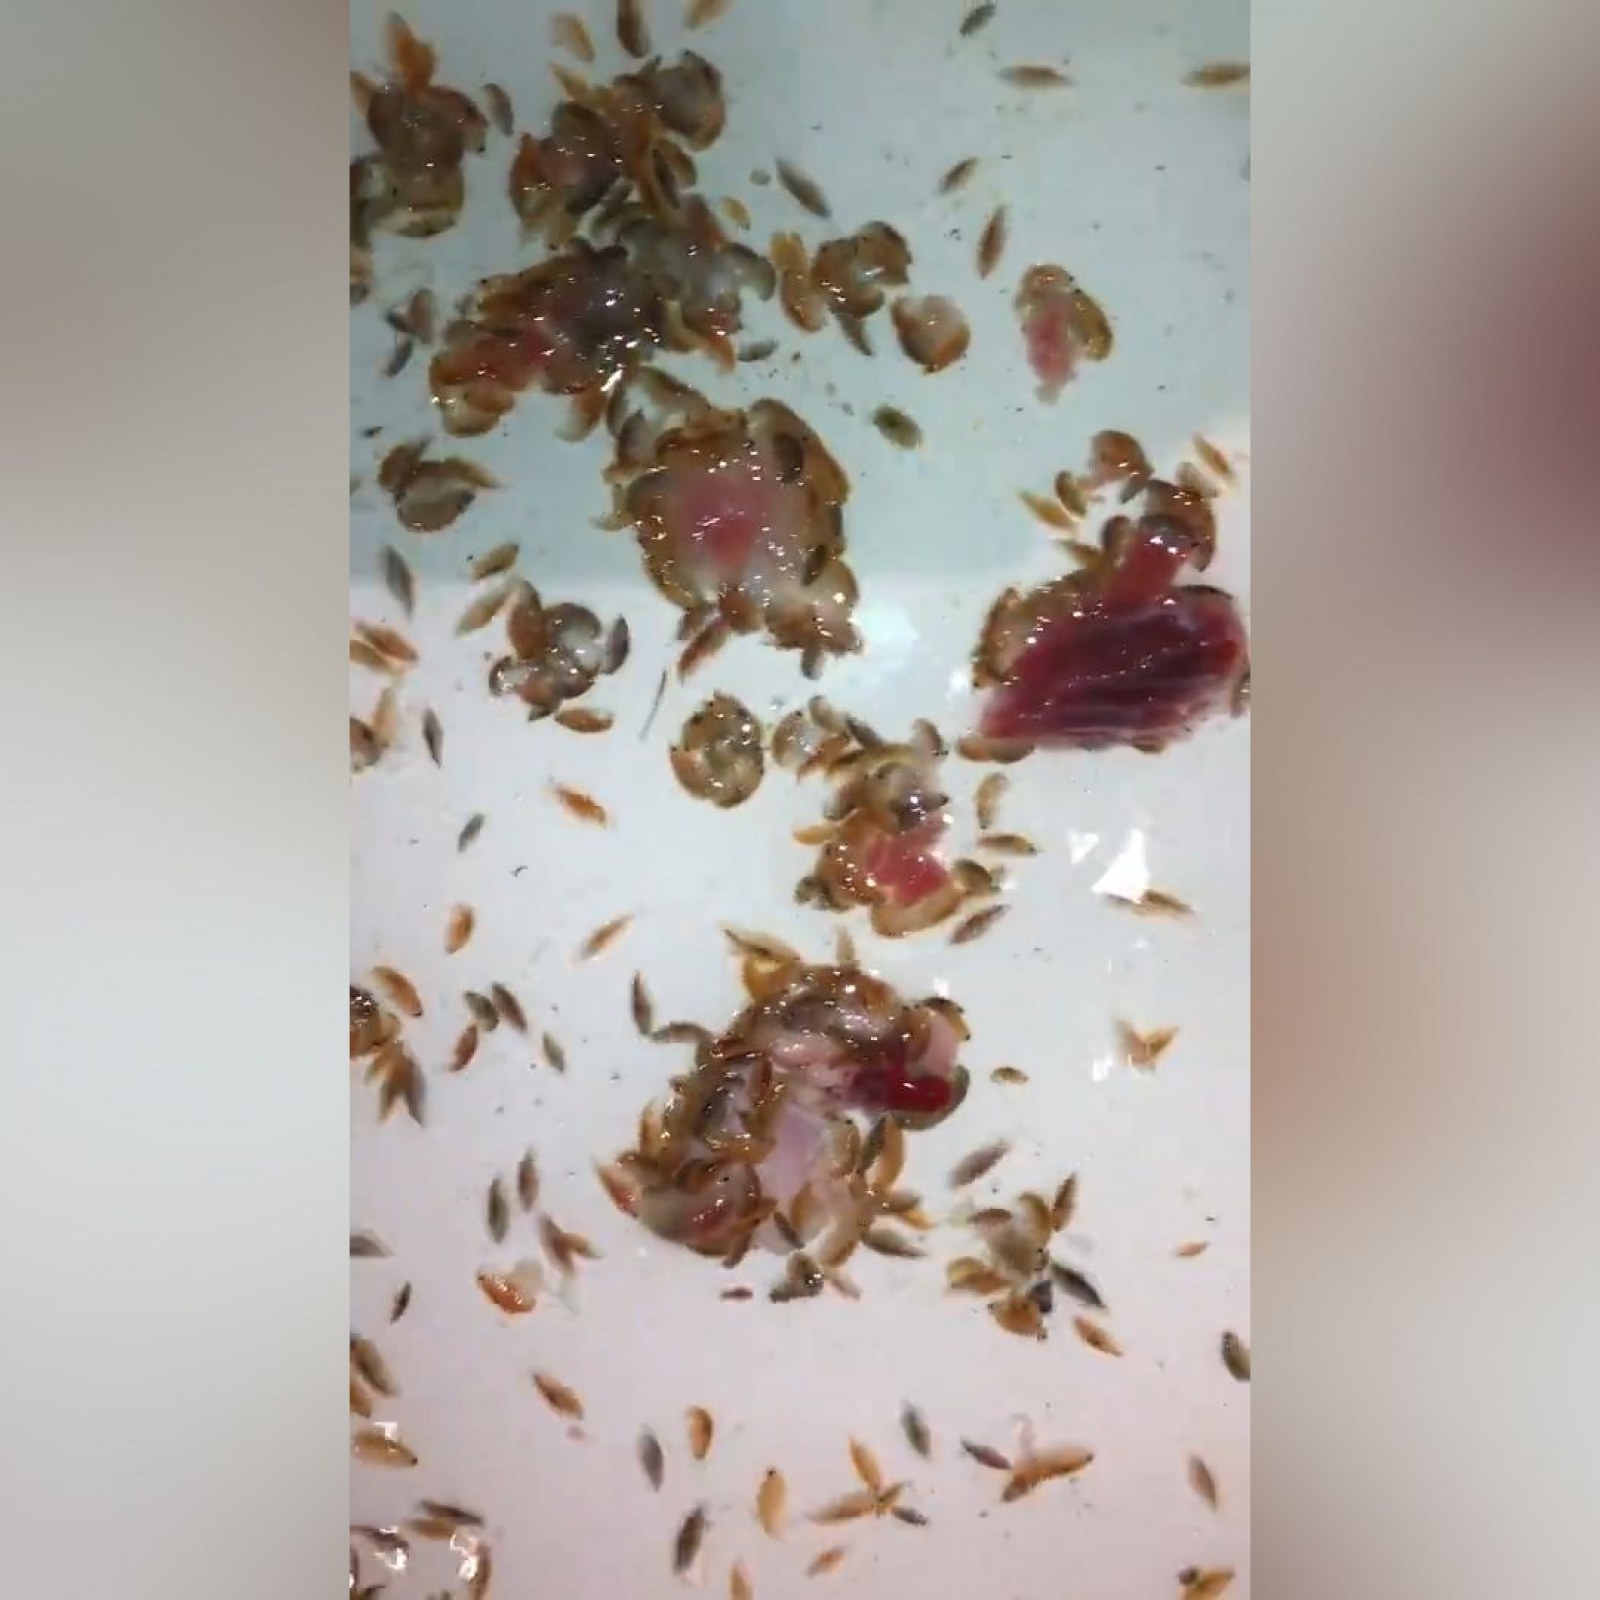 Australia: Flesh Eating Sea Fleas Attack Teen's Legs While Swimming